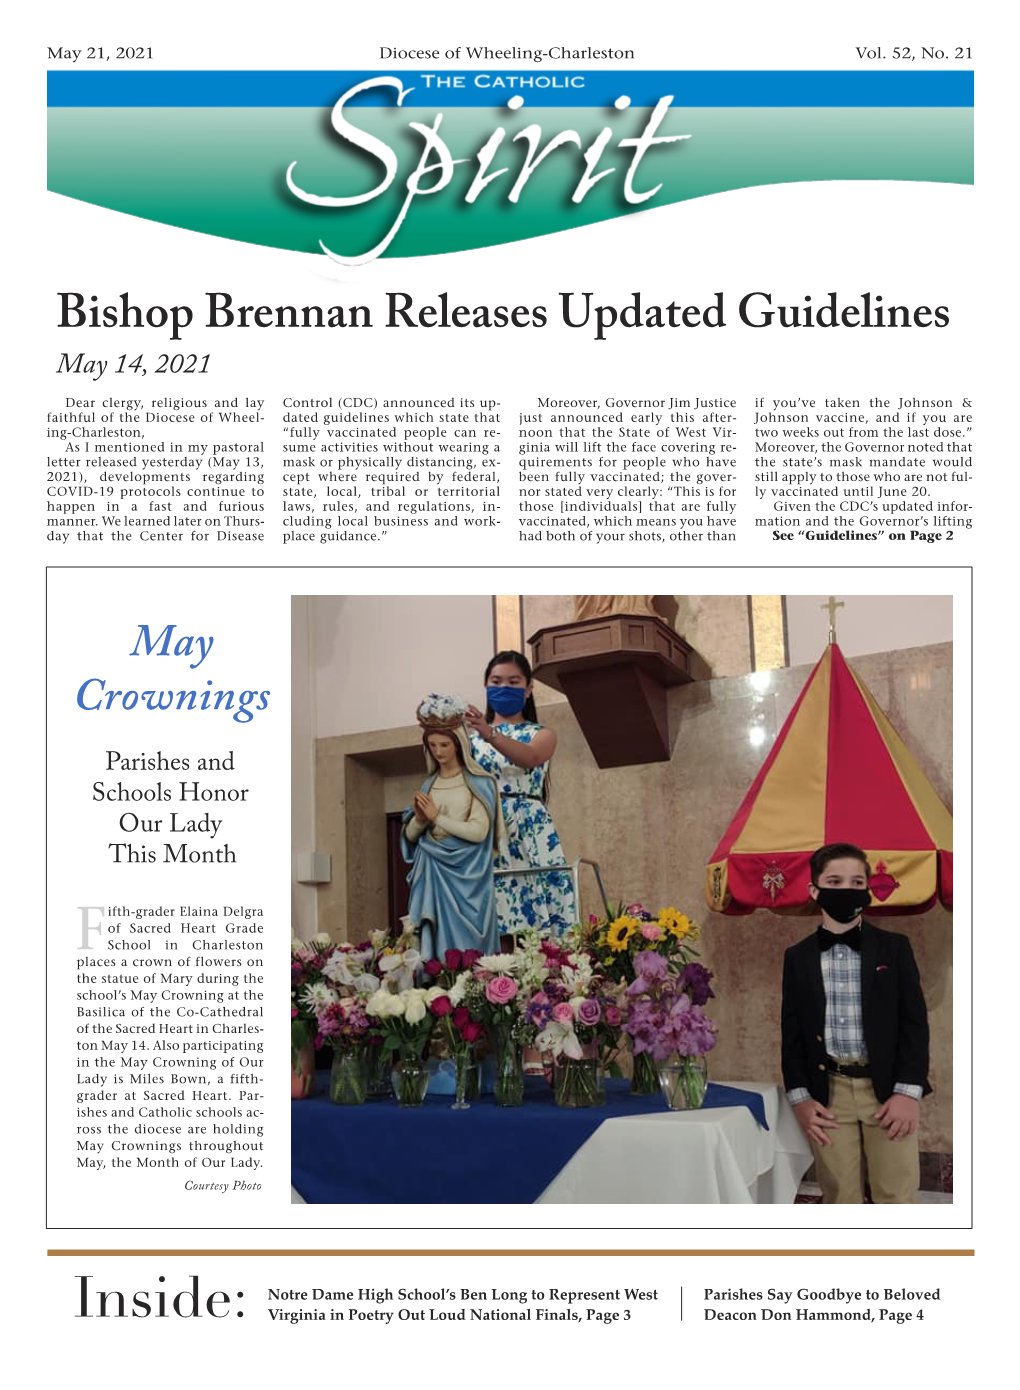 Bishop Brennan Releases Updated Guidelines May 14, 2021